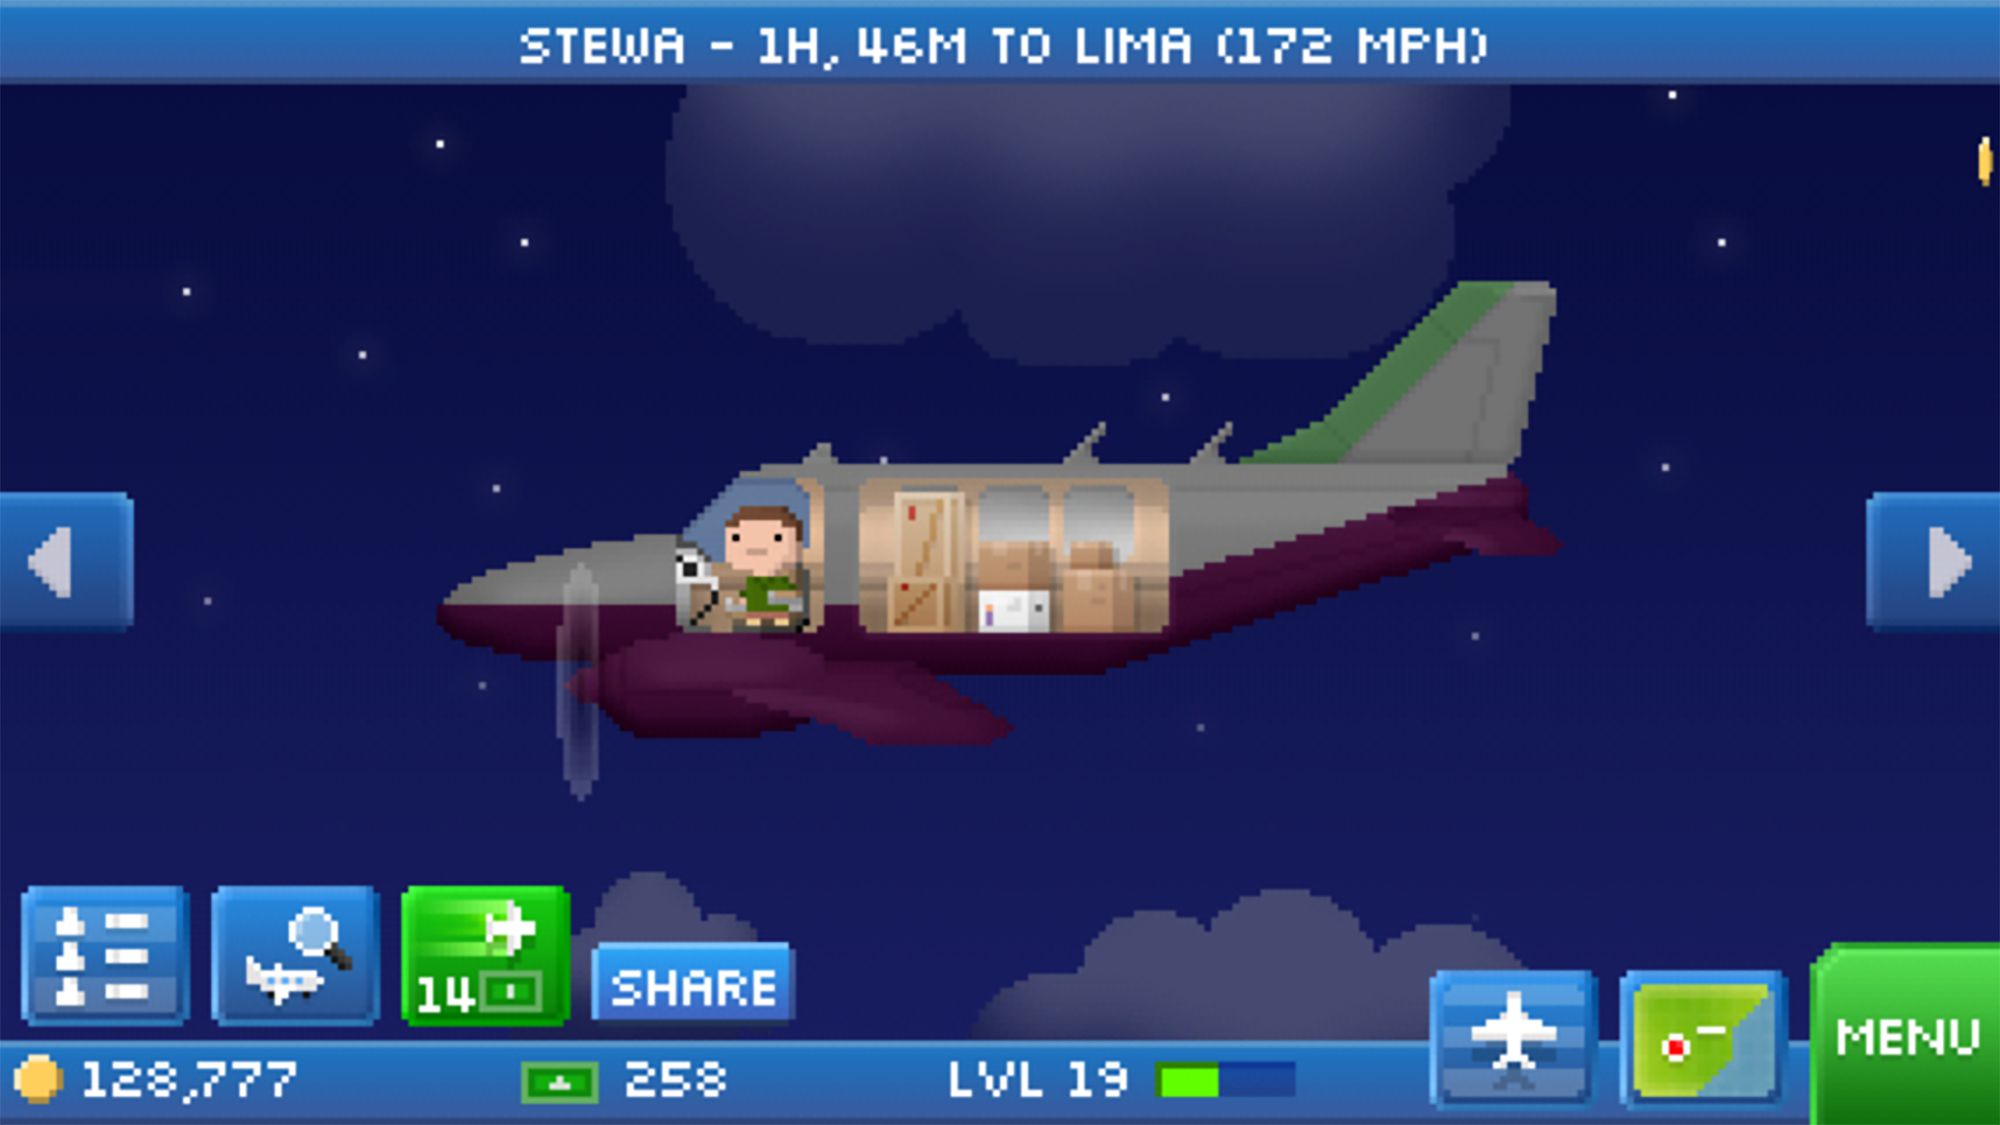 Pocket Planes - Android game screenshots.